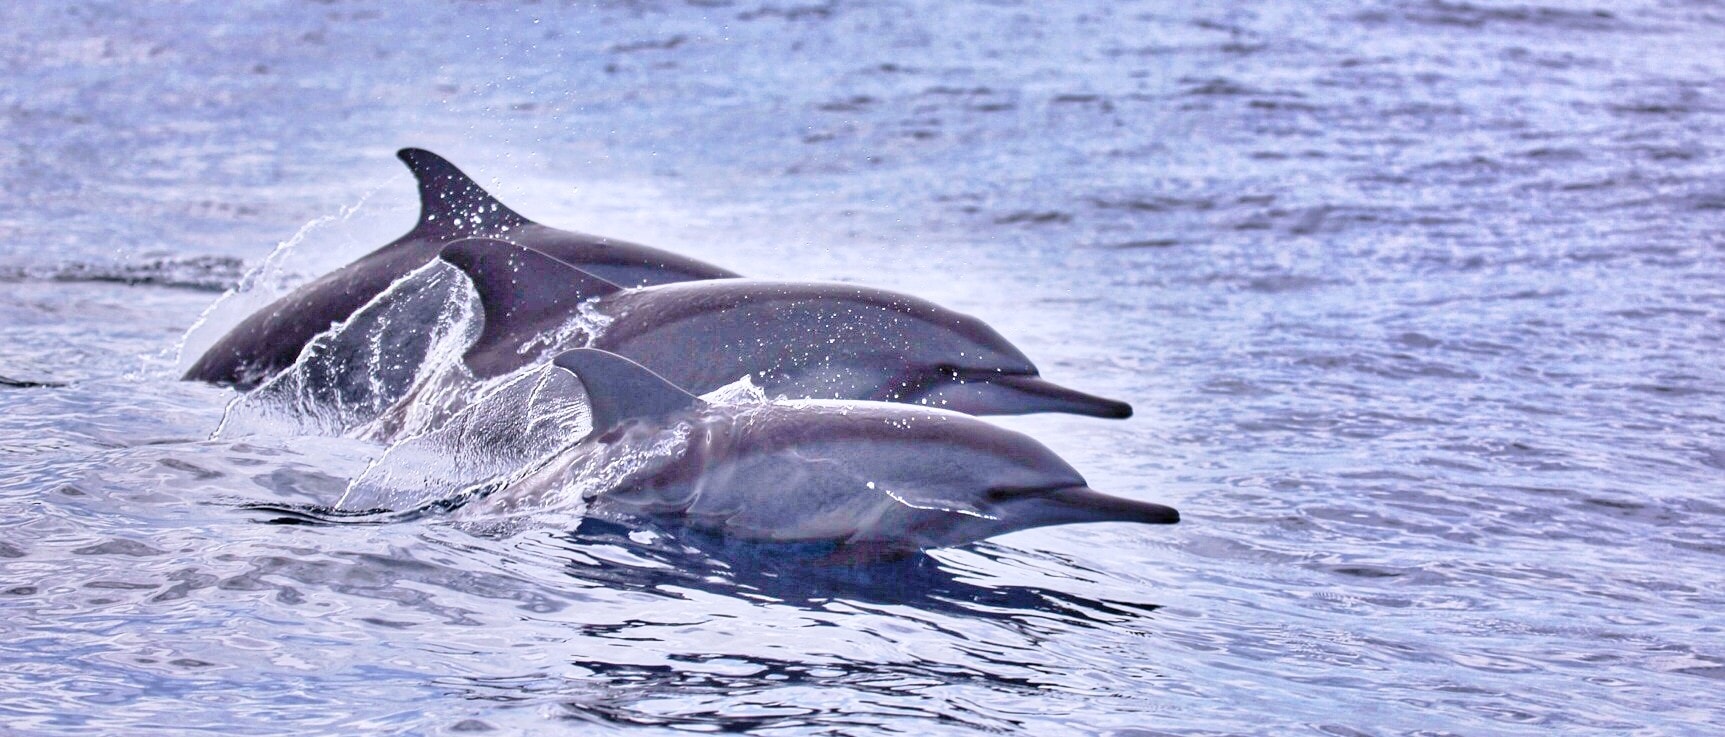 Kiluan Bay: Dolphins and Natural Beauty